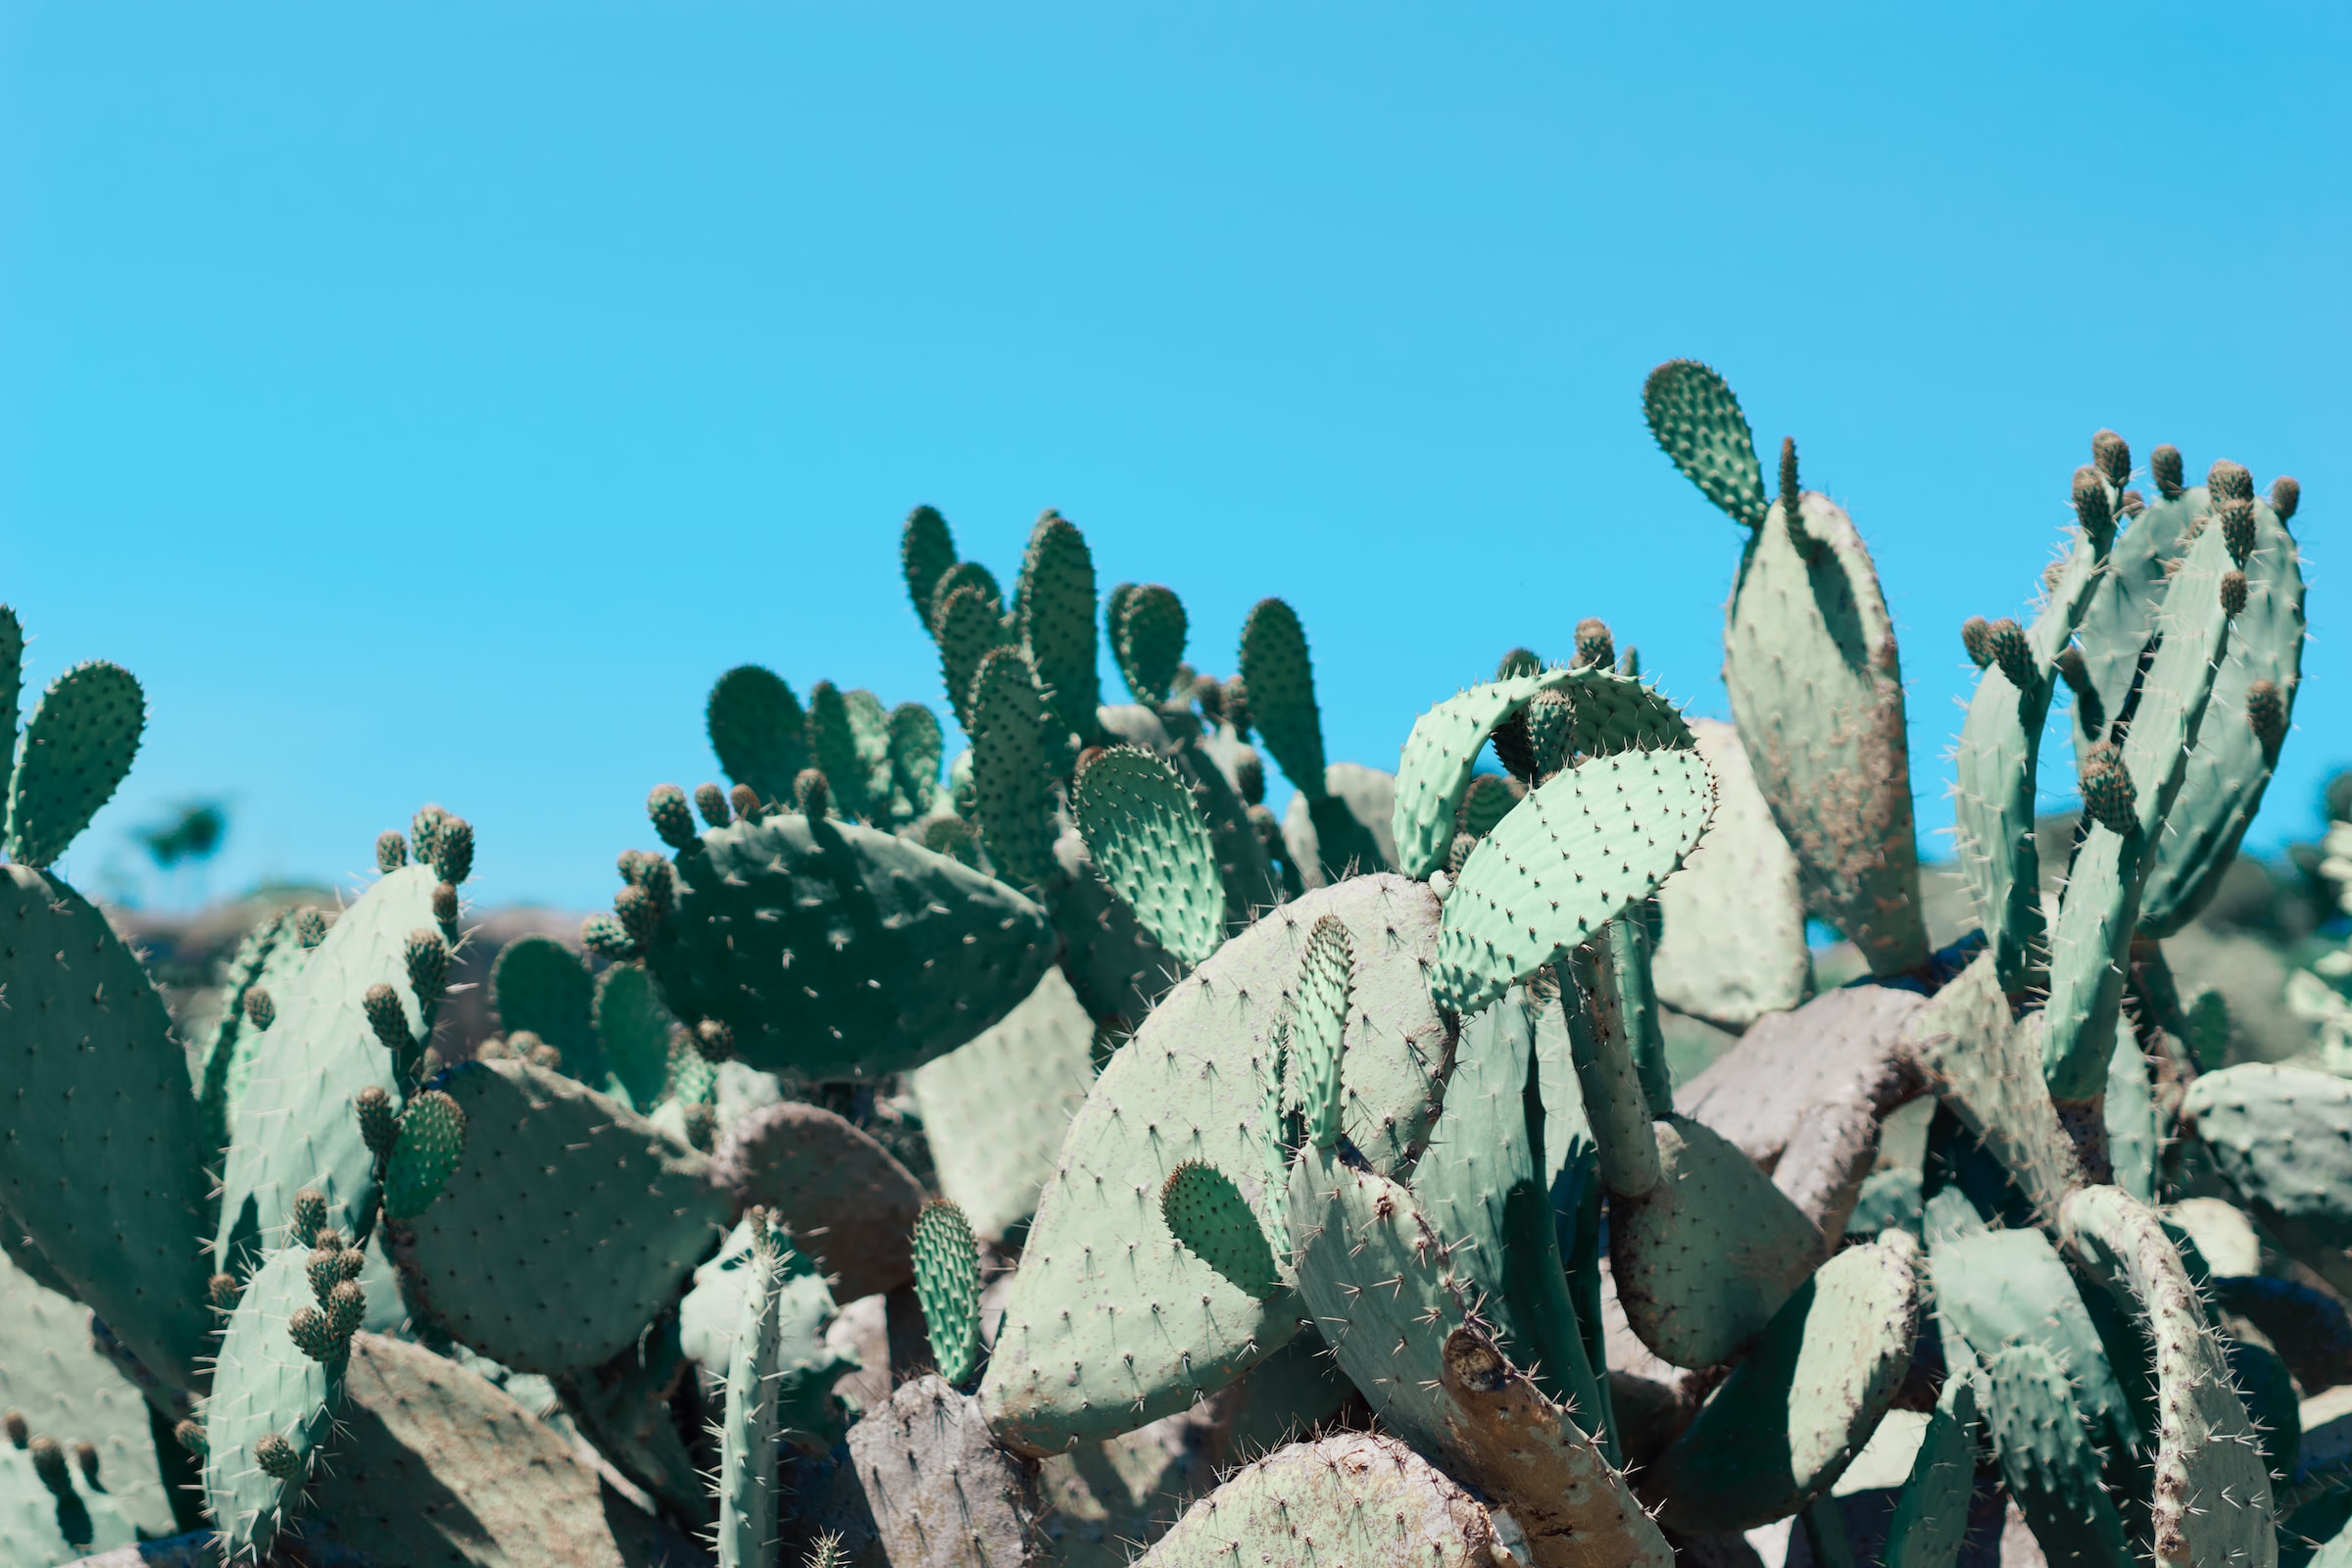 prickly pear cactus symbol of the Sicilian landscape